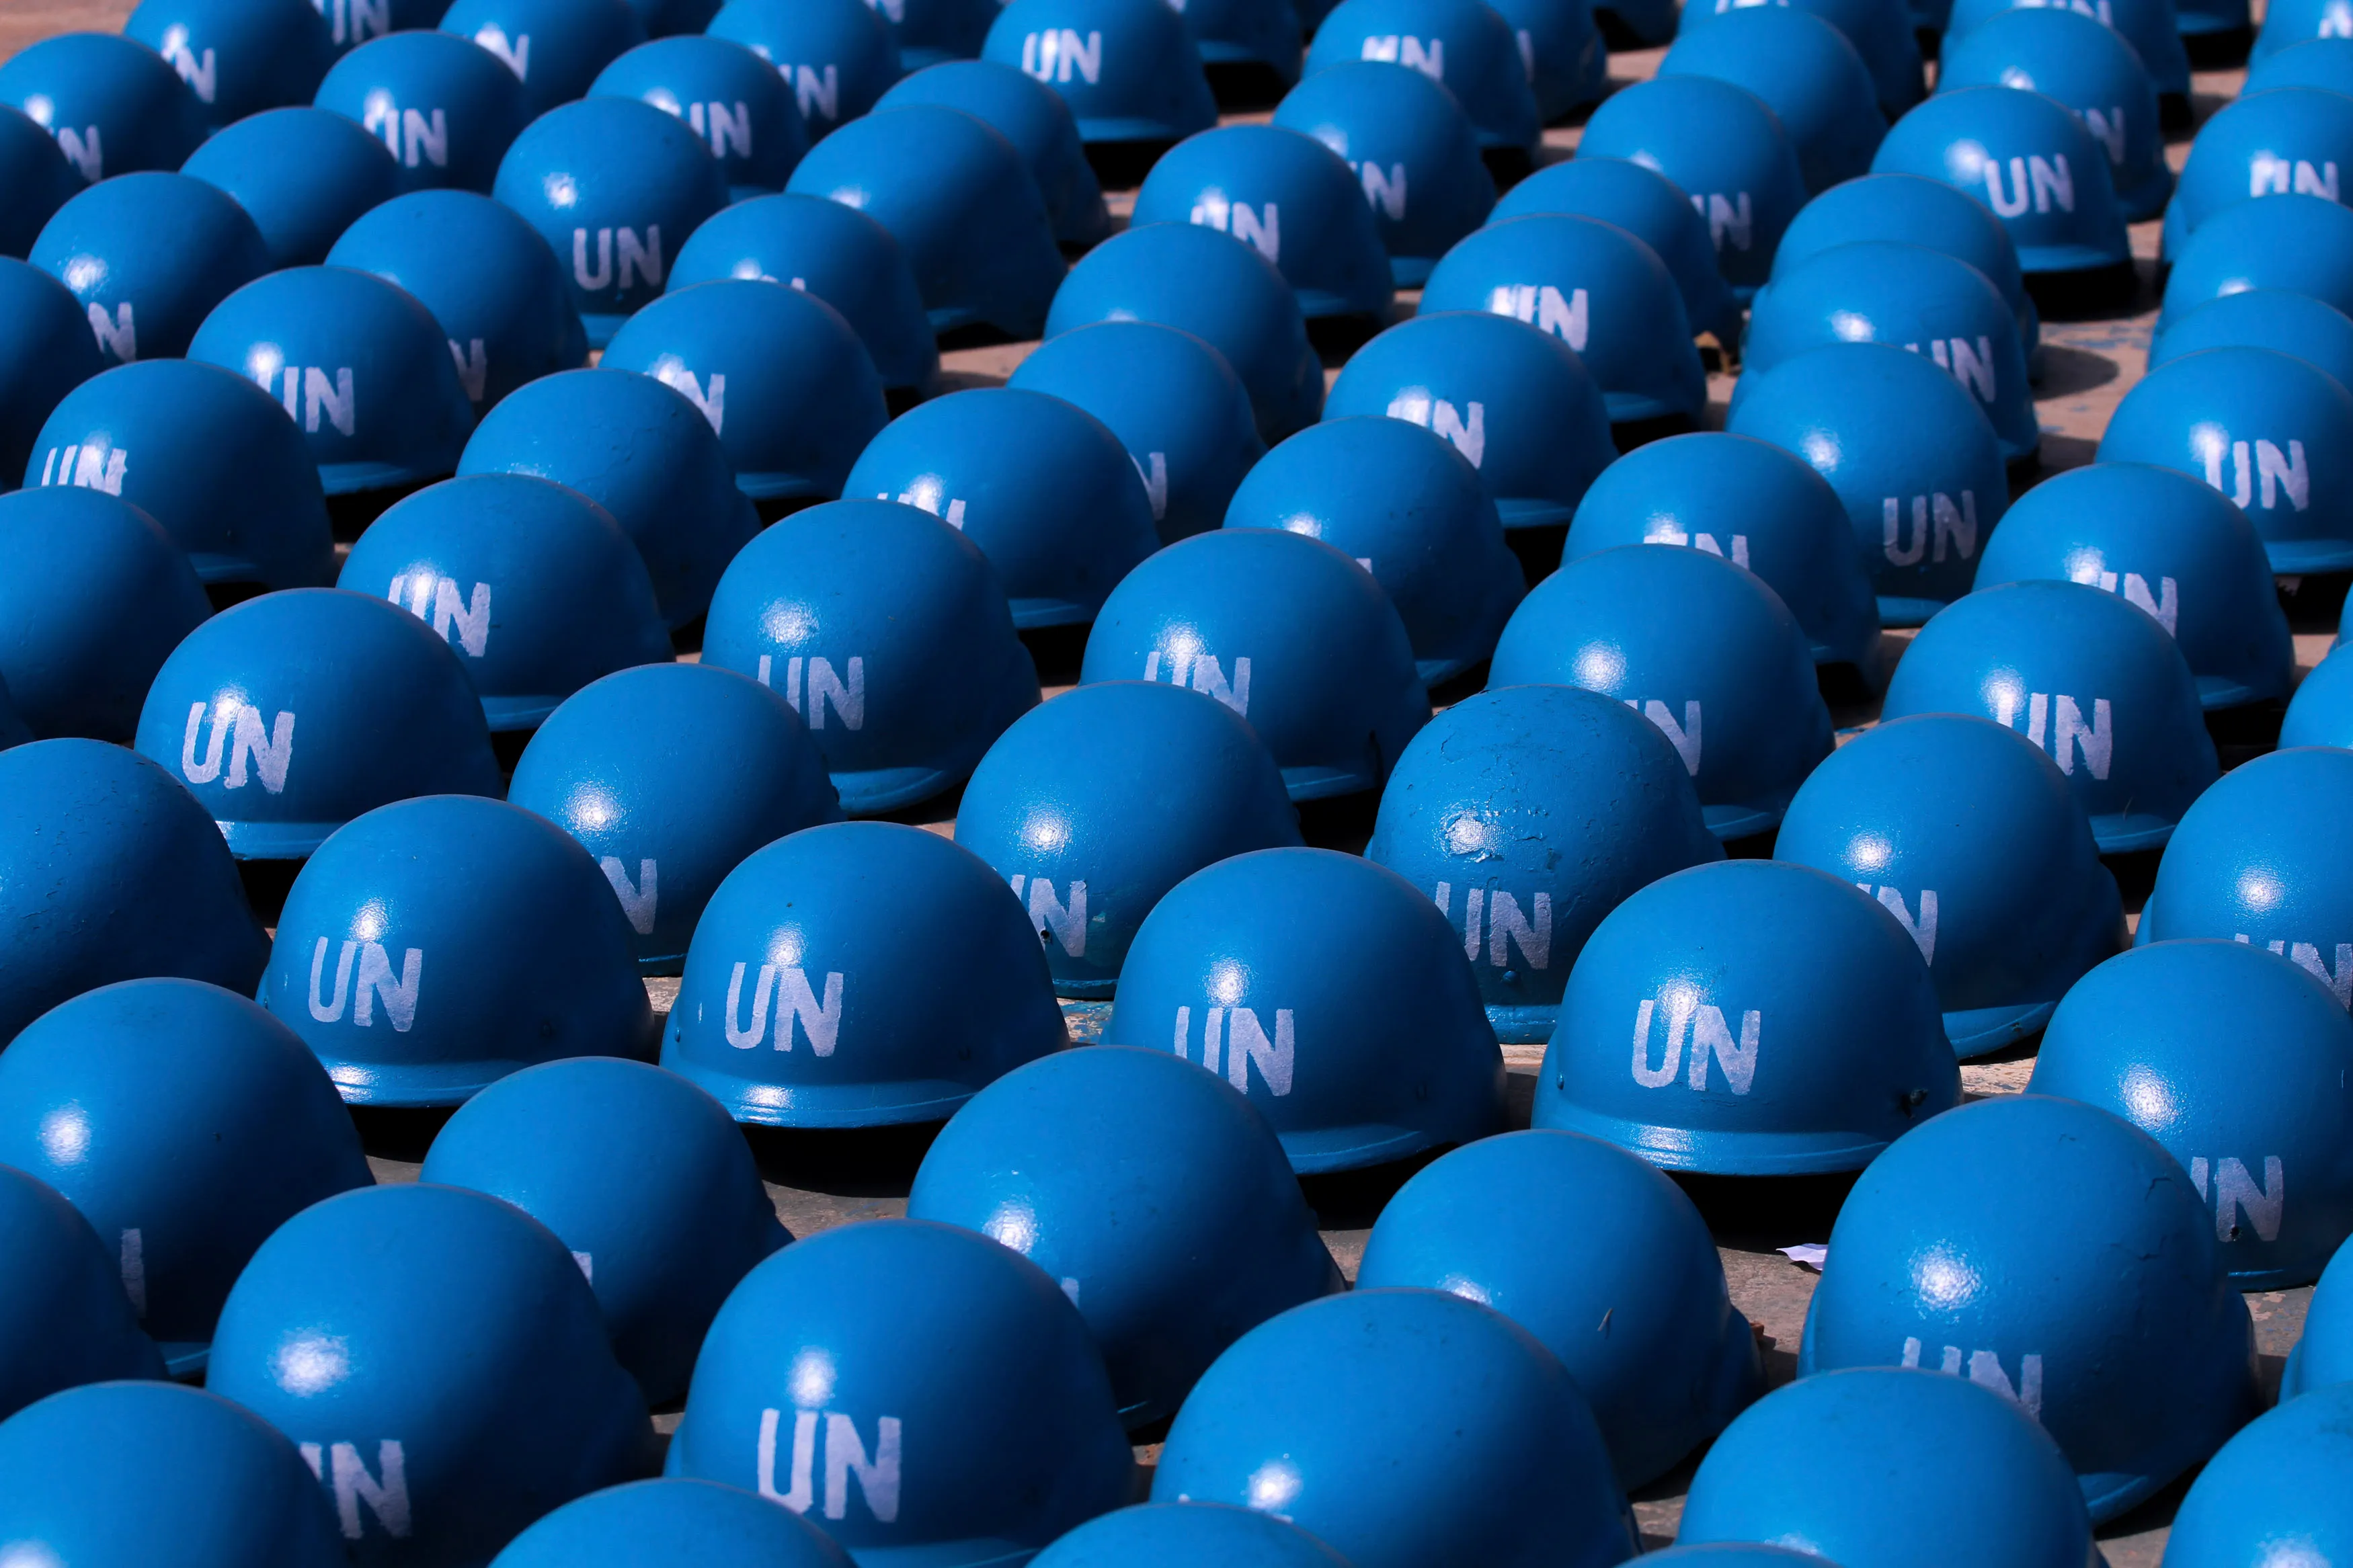 Can U.N. peacekeepers fight terrorists?